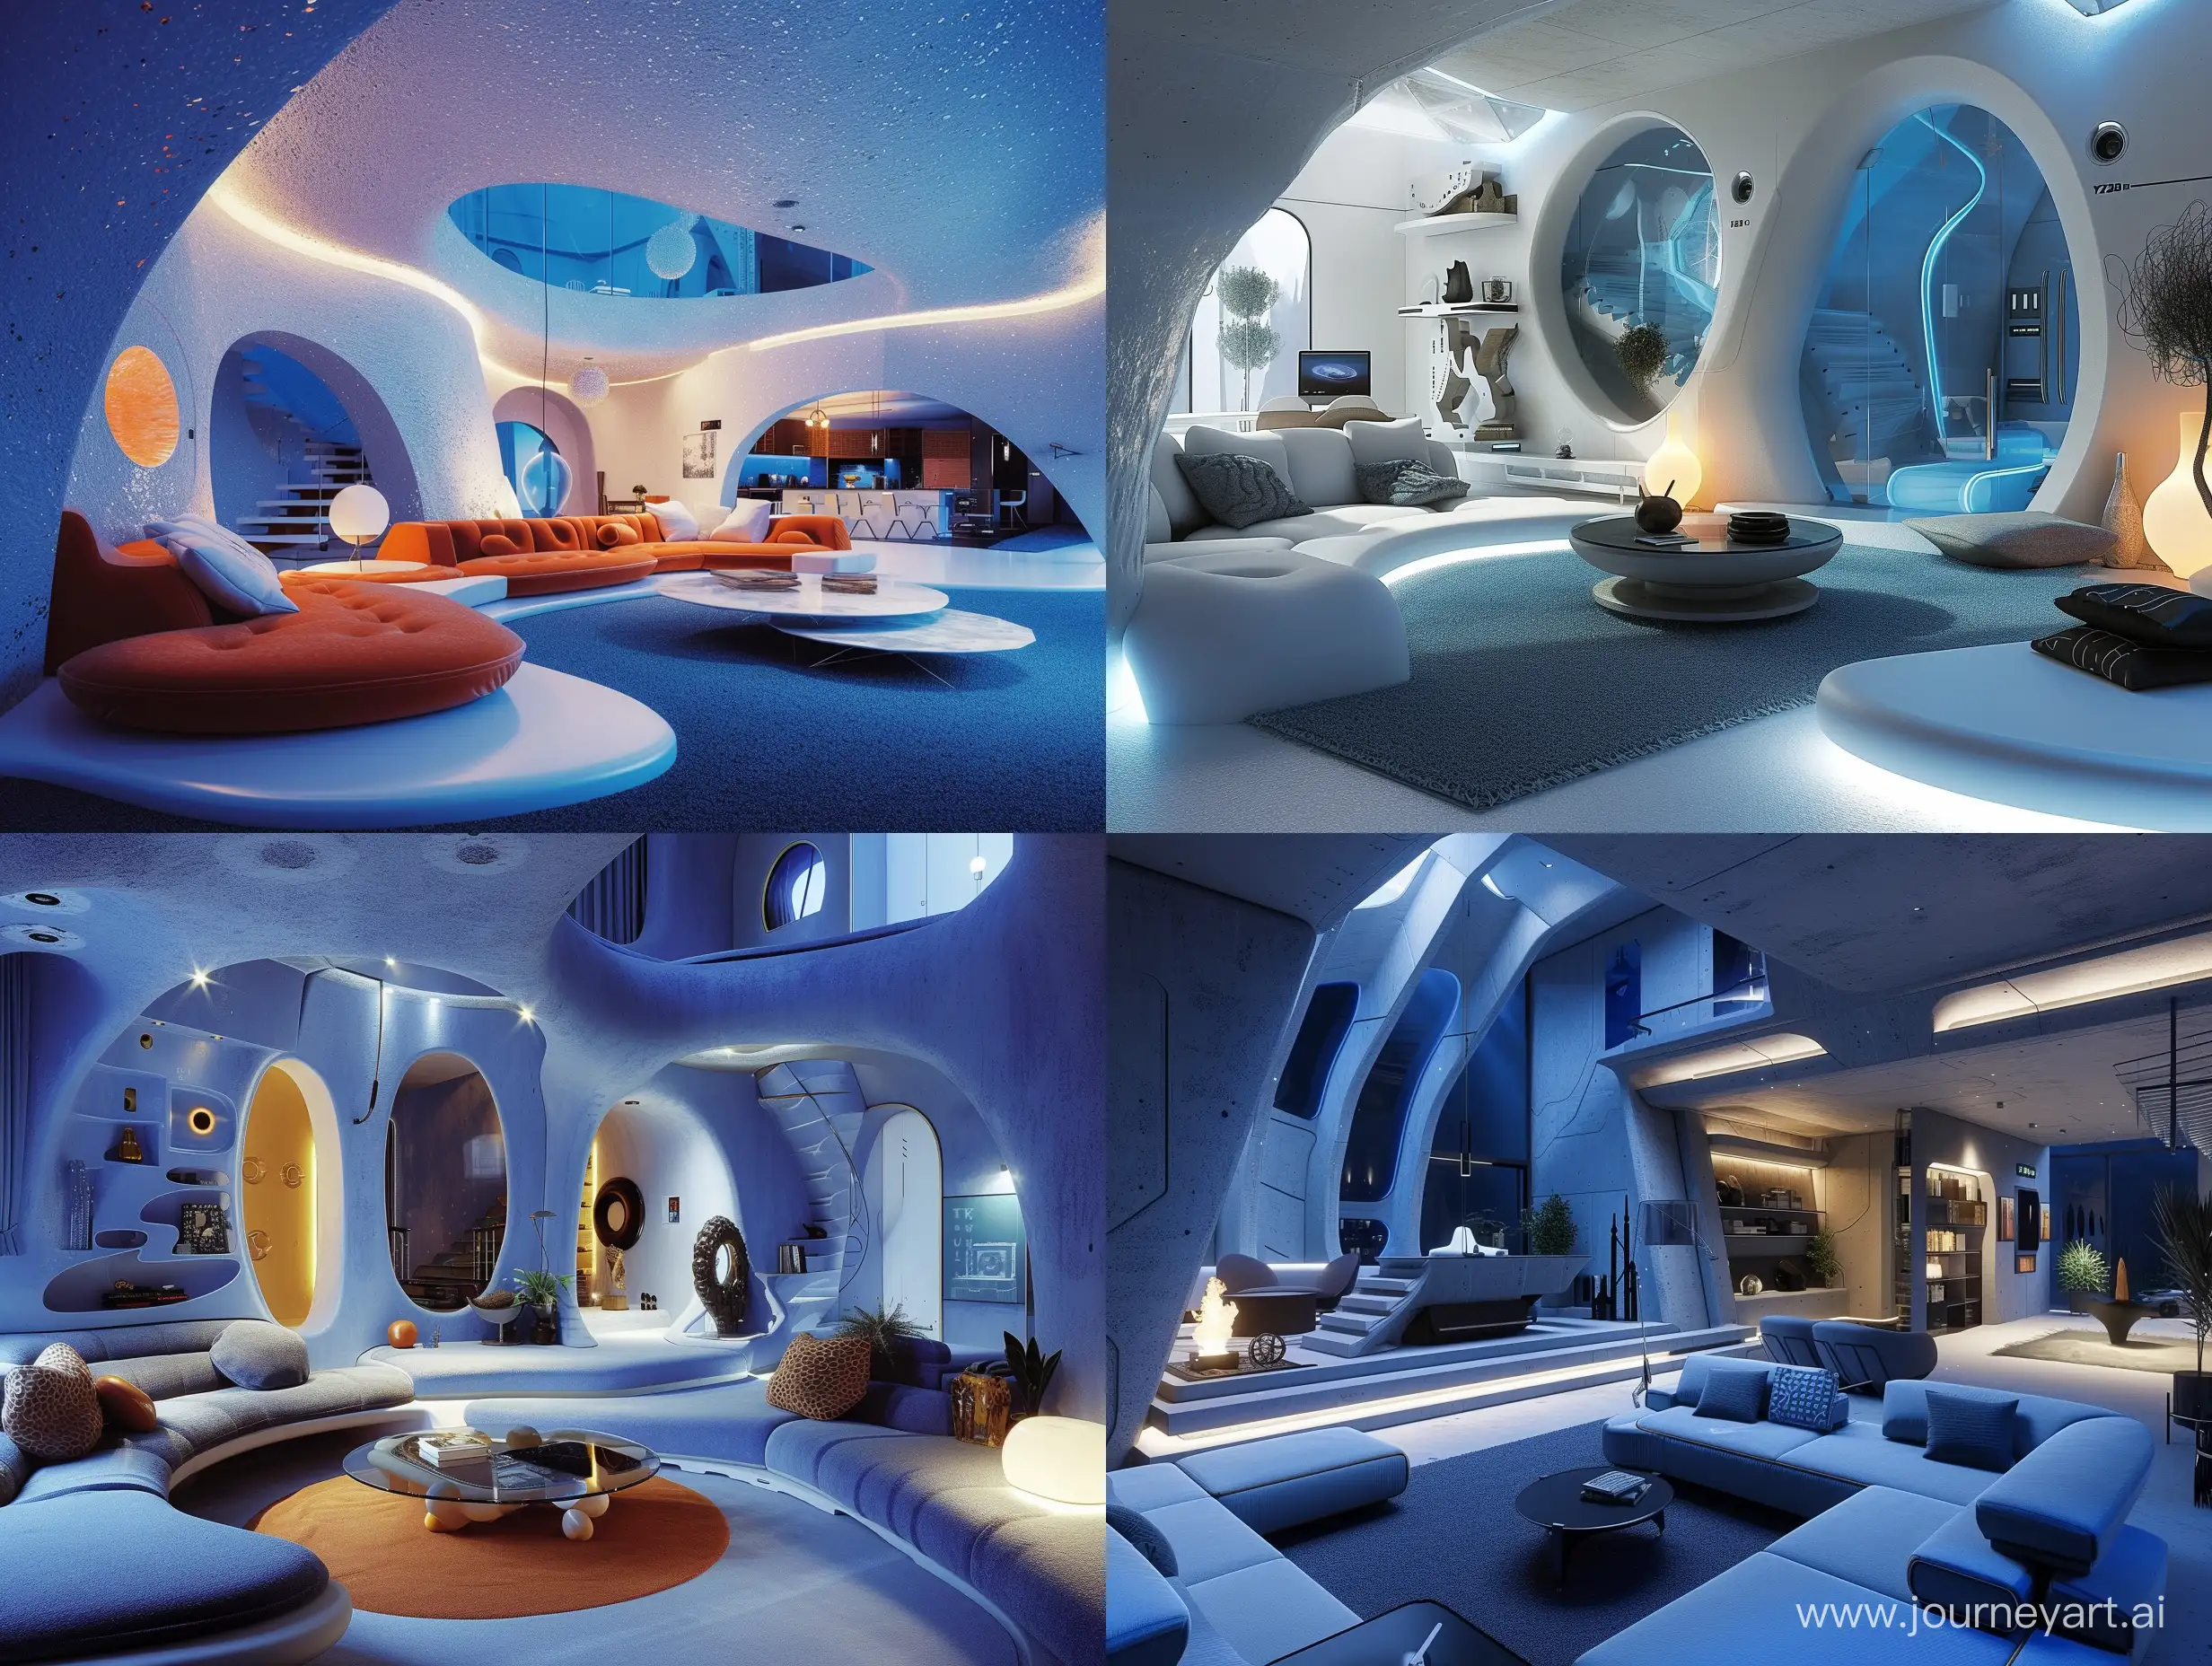 Futuristic-Y2K-BlueThemed-Living-Room-with-Unique-Architecture